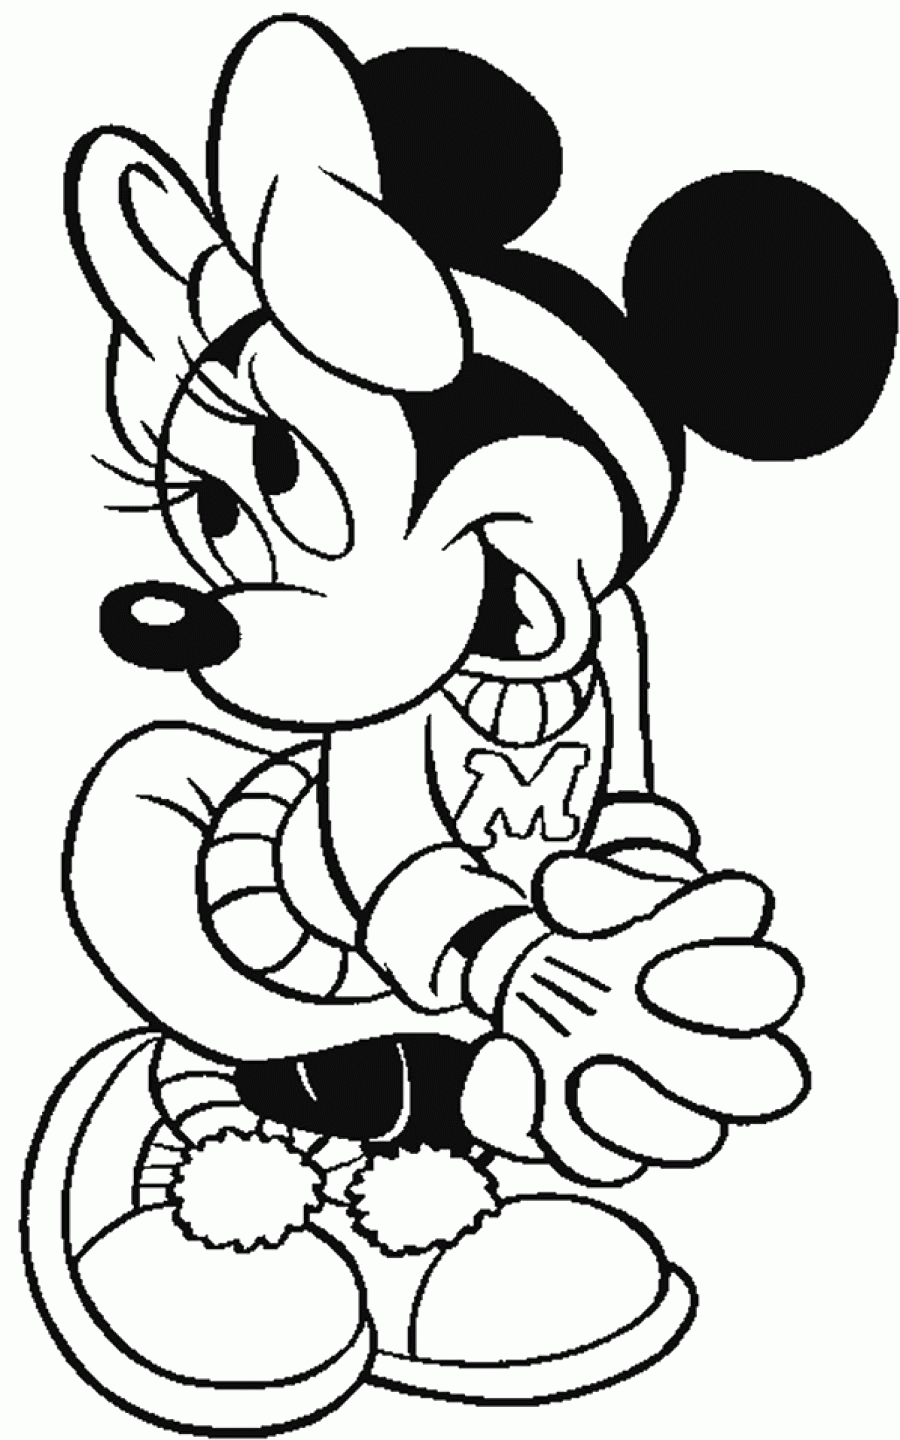 Printable Minnie Mouse Coloring Pages - SheetalColor.com